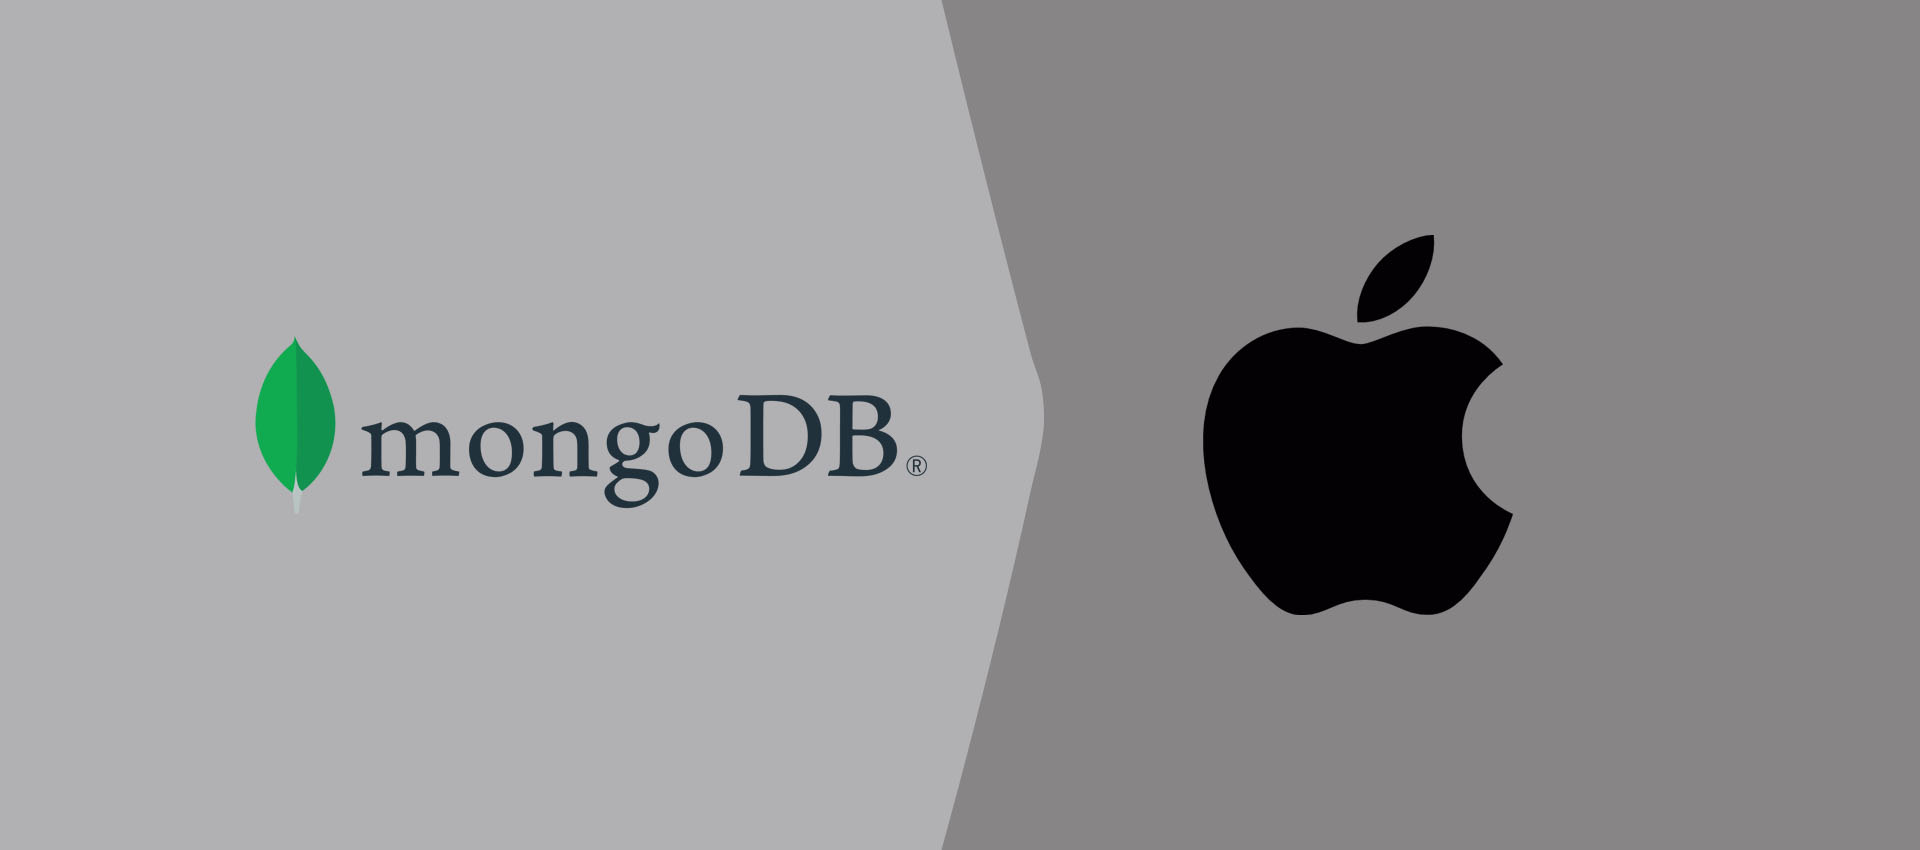 How To Install MongoDB 5 on Mac